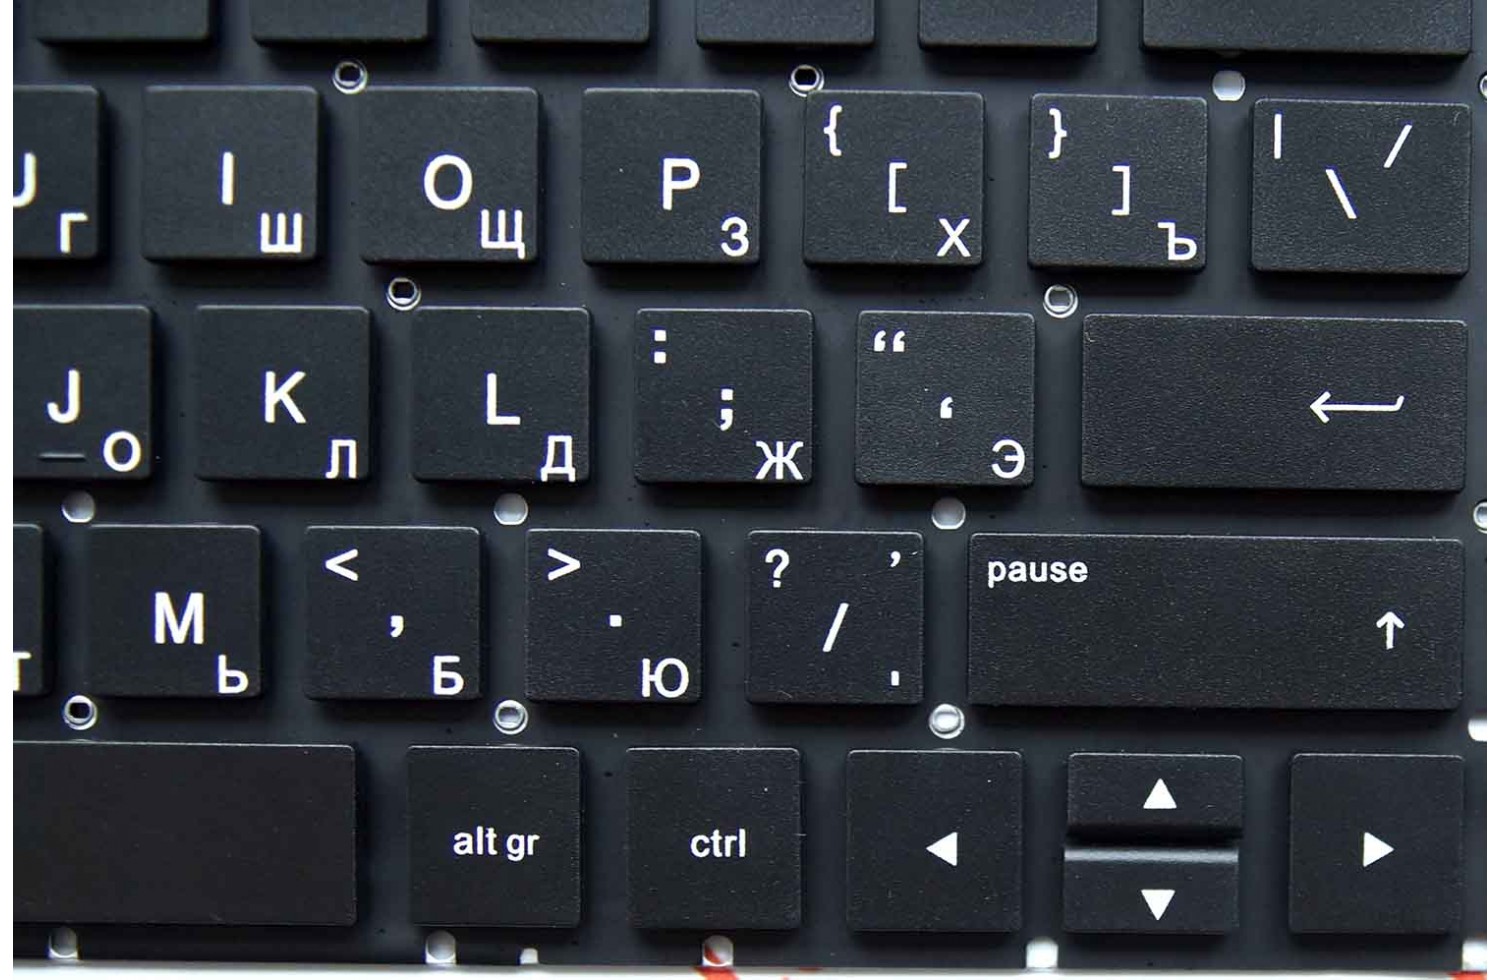 Как выглядит клавиатура на ноутбуке фото